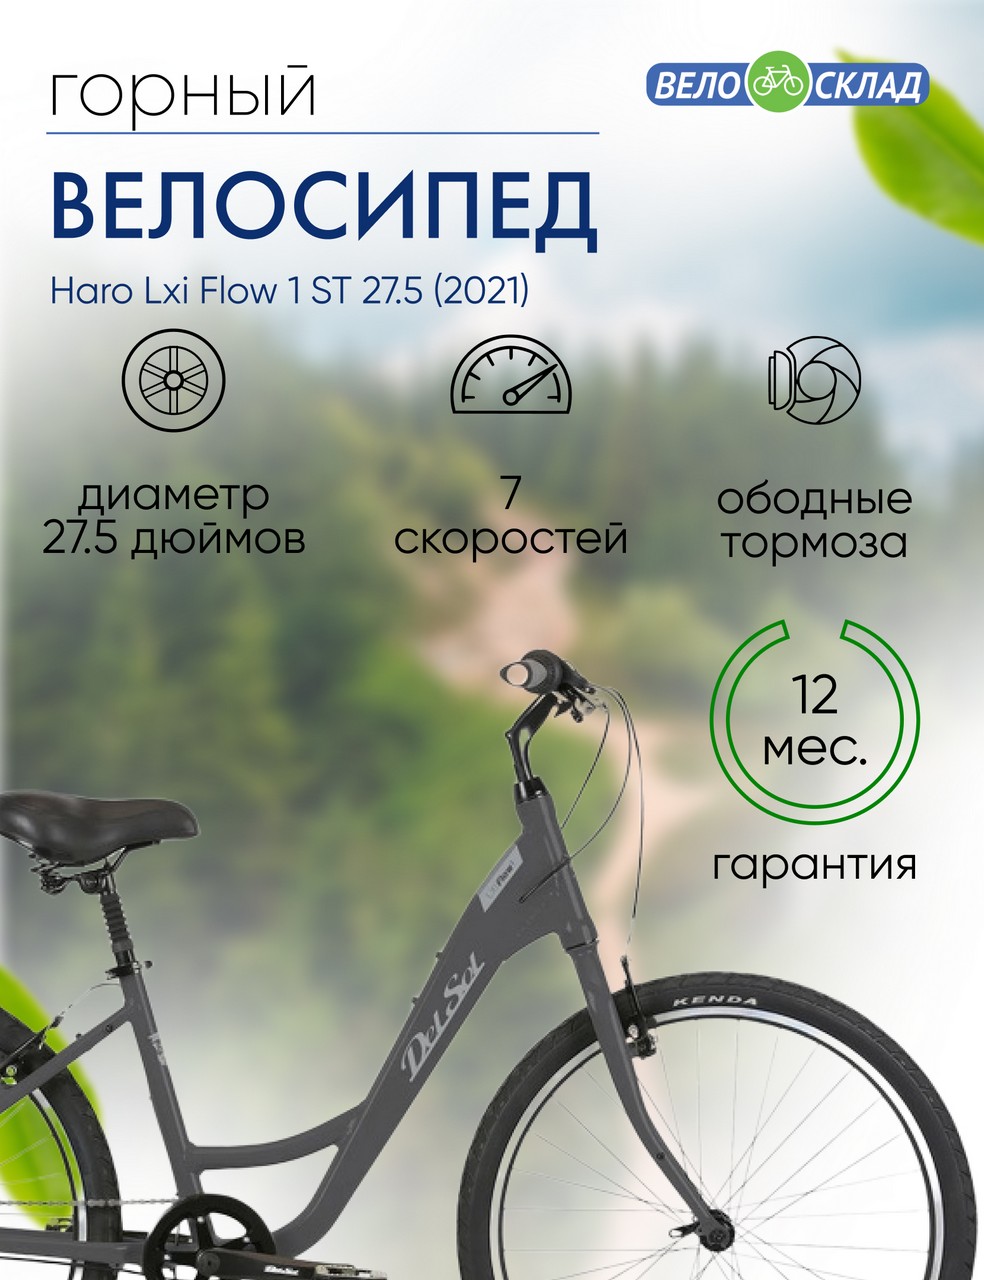 Женский велосипед Haro Lxi Flow 1 ST 27.5, год 2021, цвет Серебристый, ростовка 17